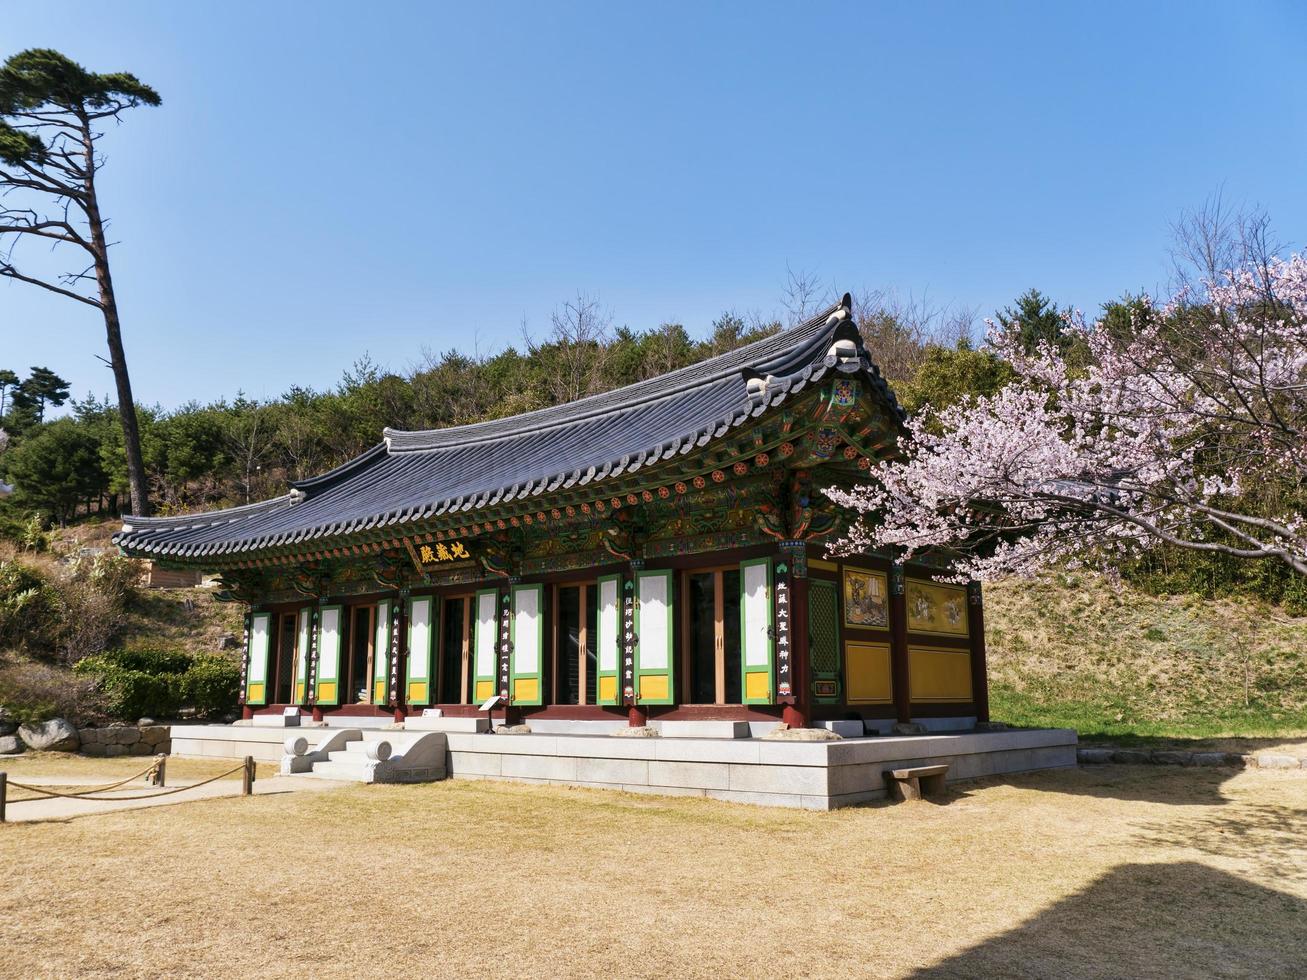 edifício tradicional coreano no templo de naksansa, coreia do sul foto